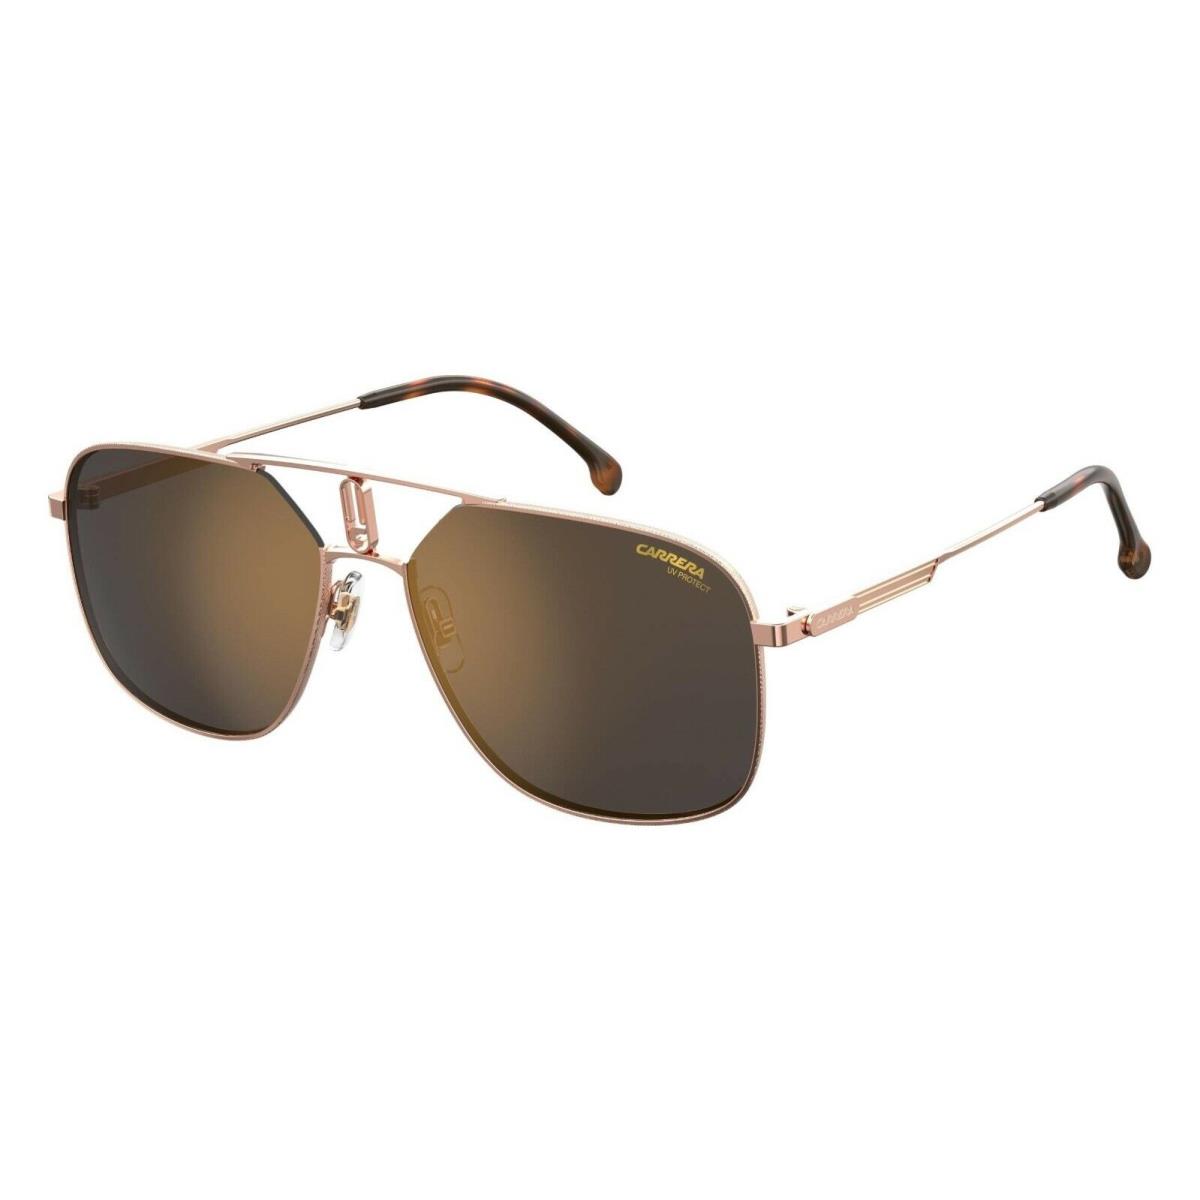 Carrera Sunglasses 1024/S 0DDB JO Gold Copper Black/ Grey Gold Mirror Lens - Gold Copper Frame, Grey Gold Lens, Gold Copper Manufacturer